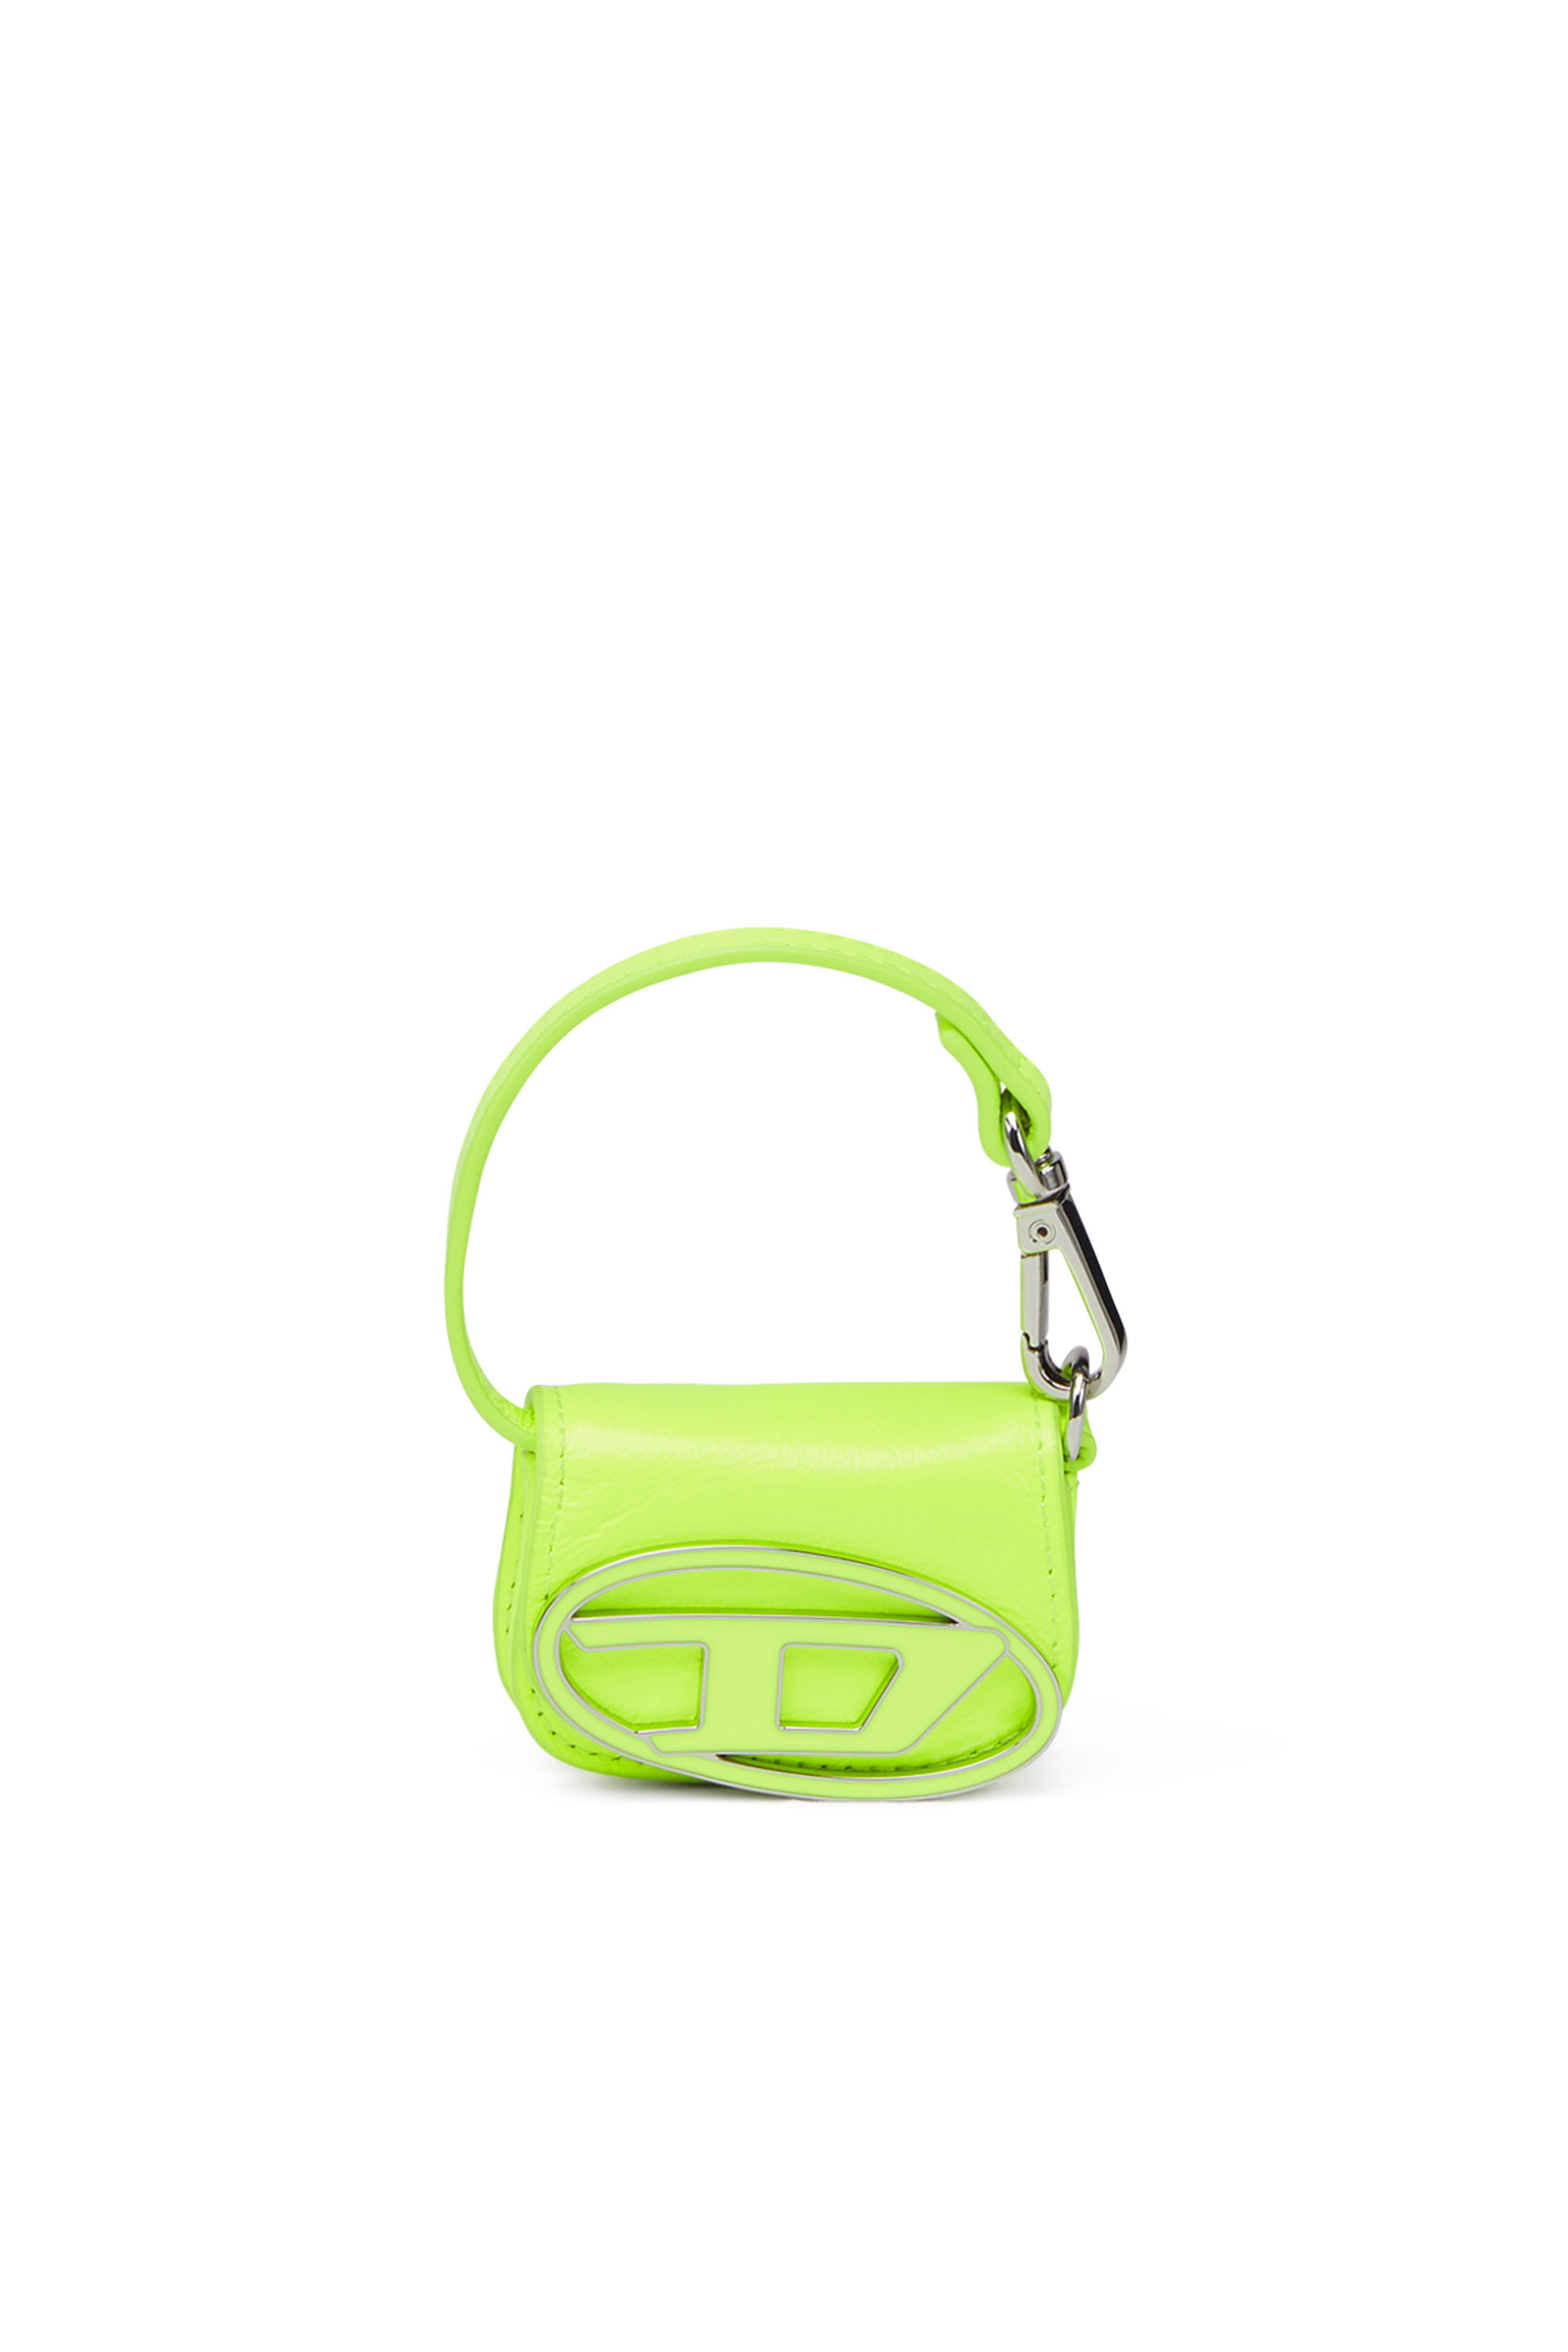 Diesel - Charm per borsa in pelle fluo - Bijoux e Gadget - Donna - Giallo